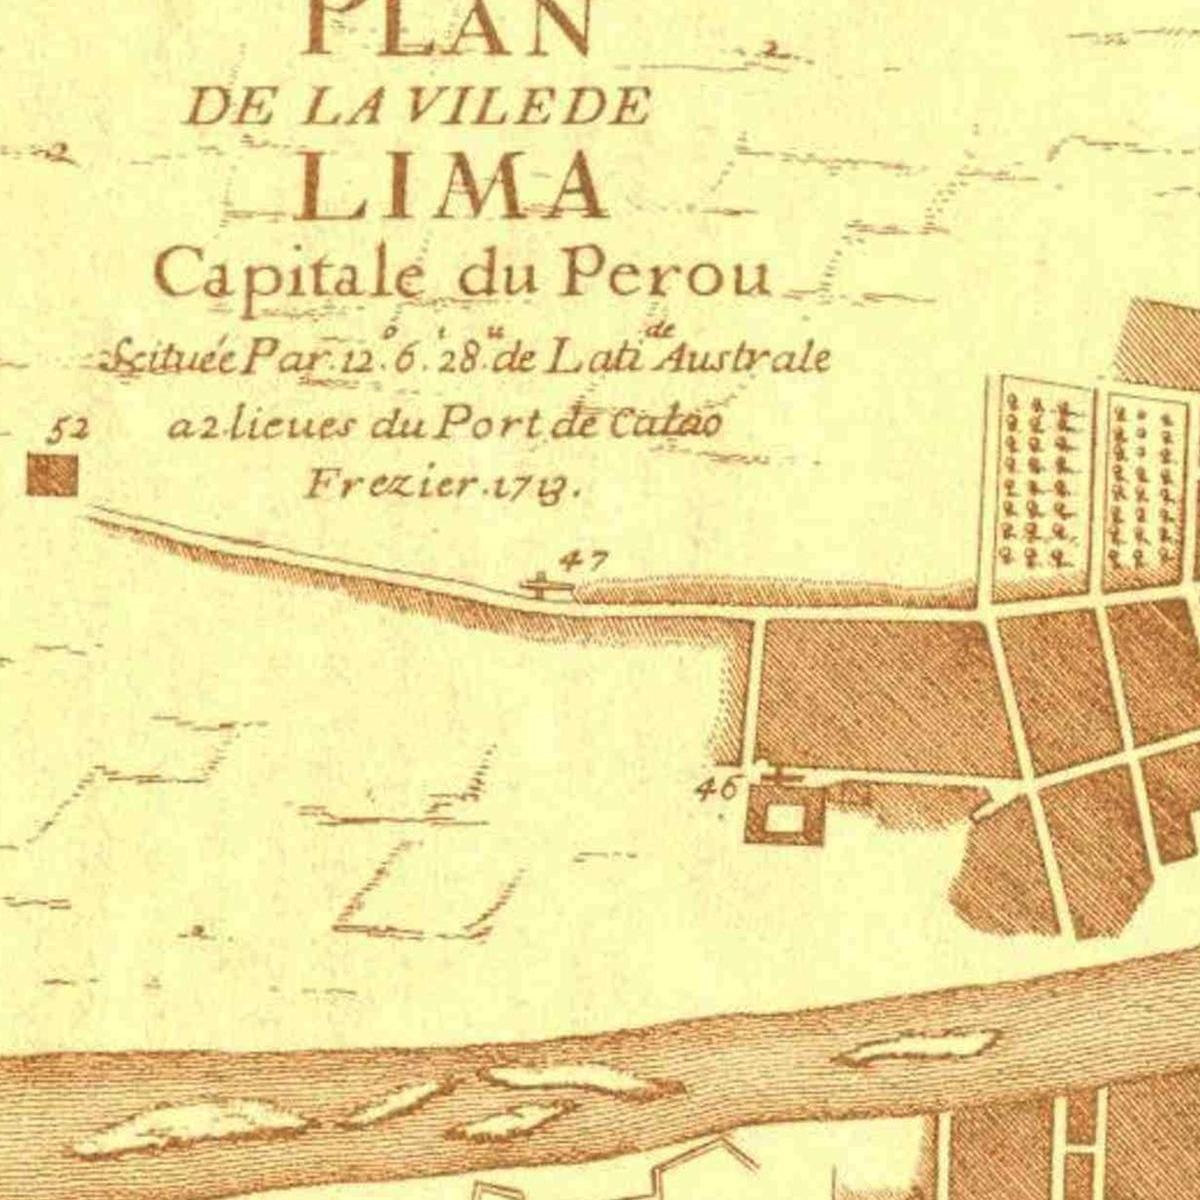 Historischer Stadtplan Lima um 1717